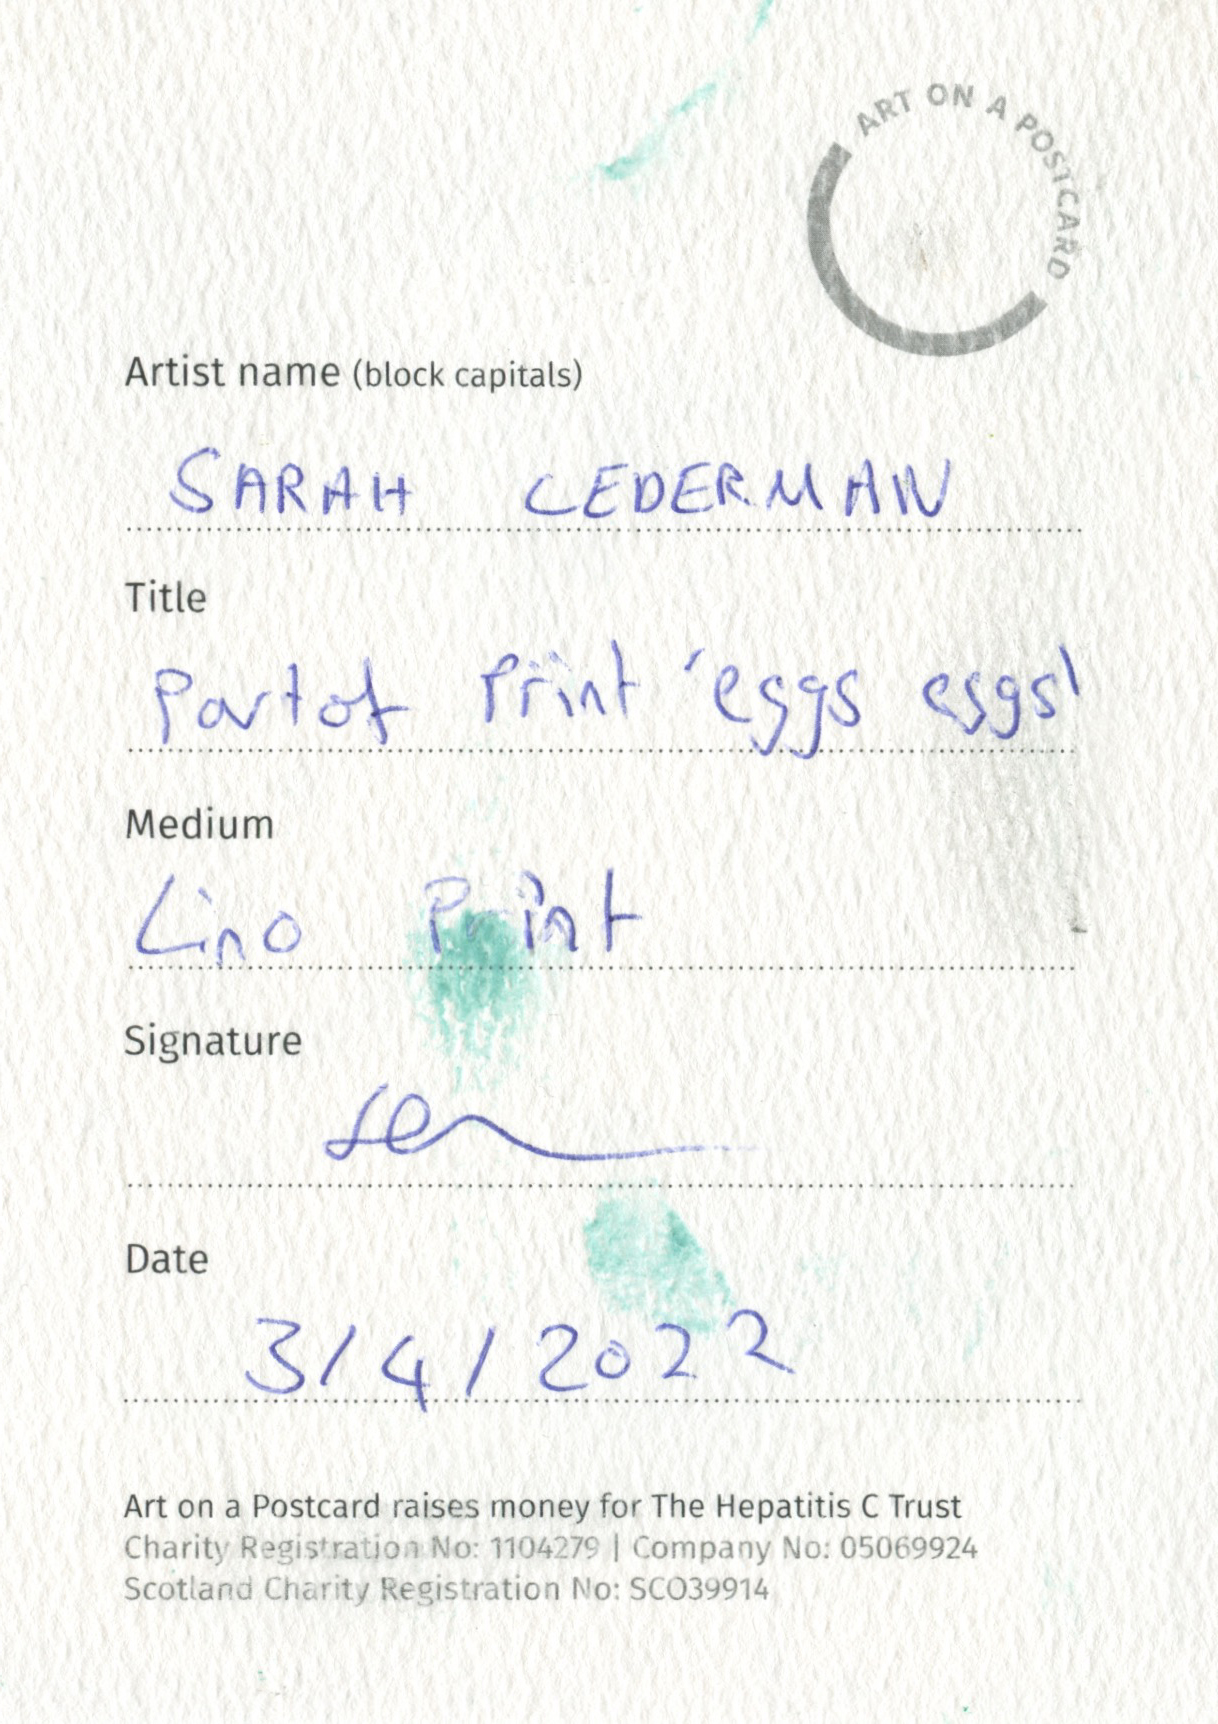 19. Sarah Lederman - Part of Print 'eggs eggs' (4) - BACK